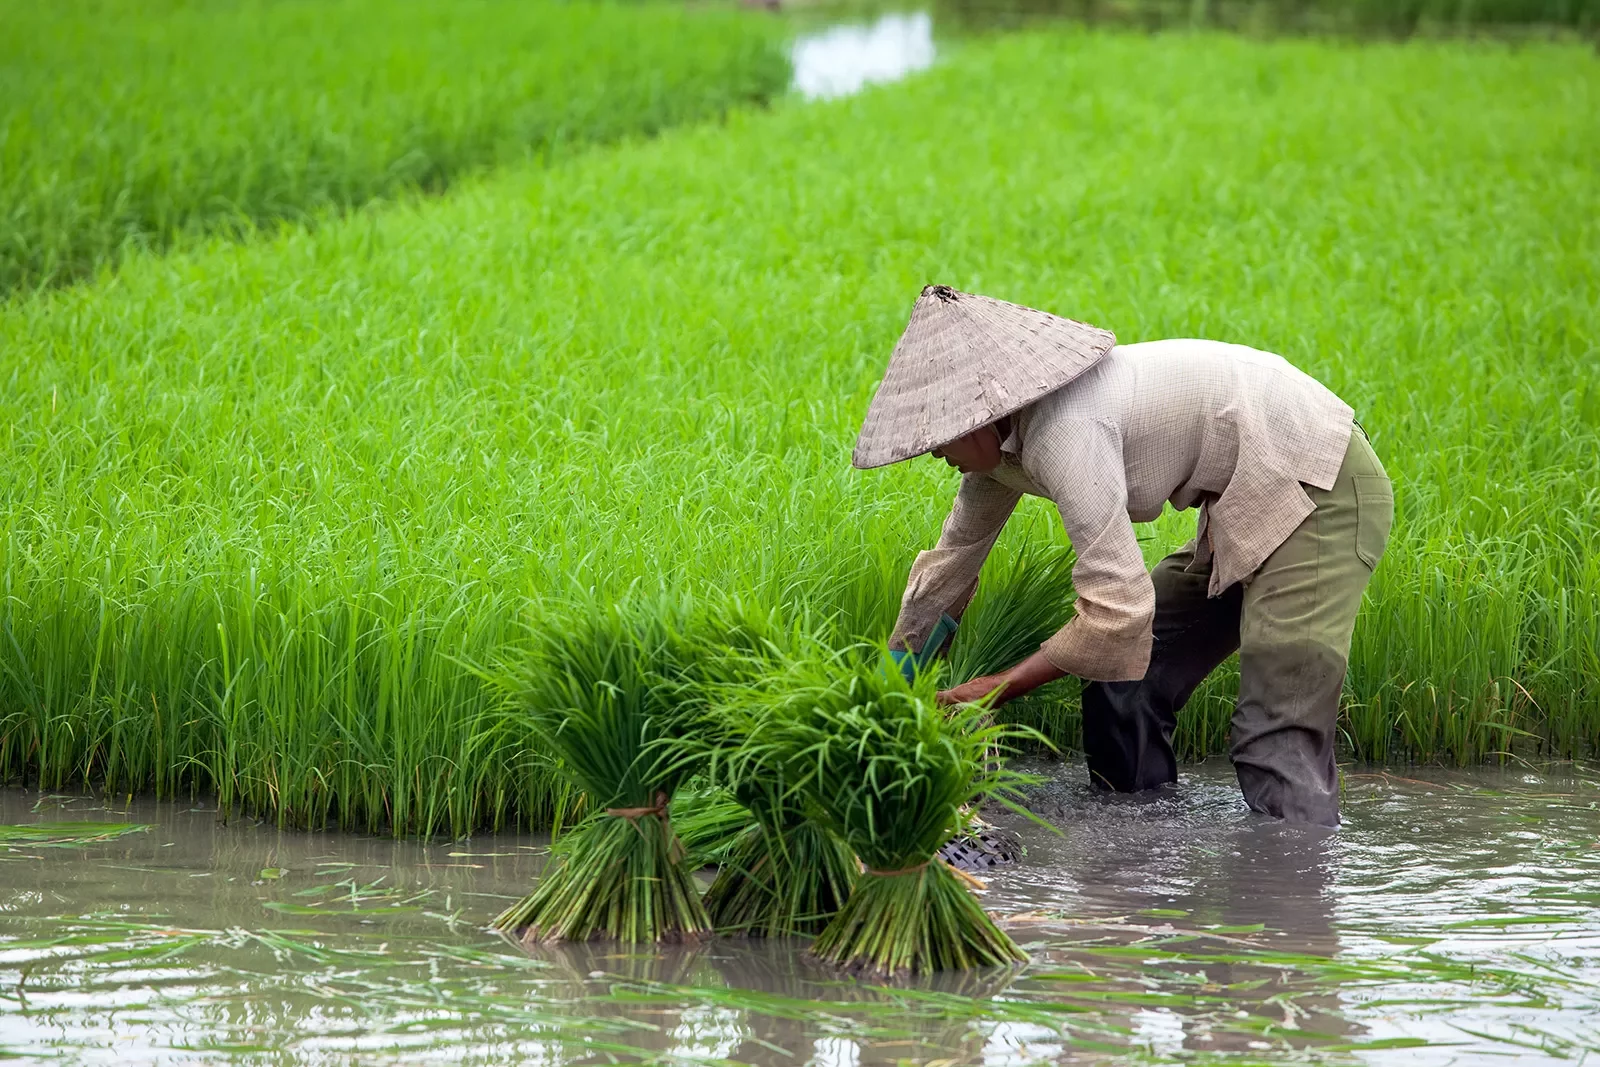 Vietnamese farmer harvesting crops